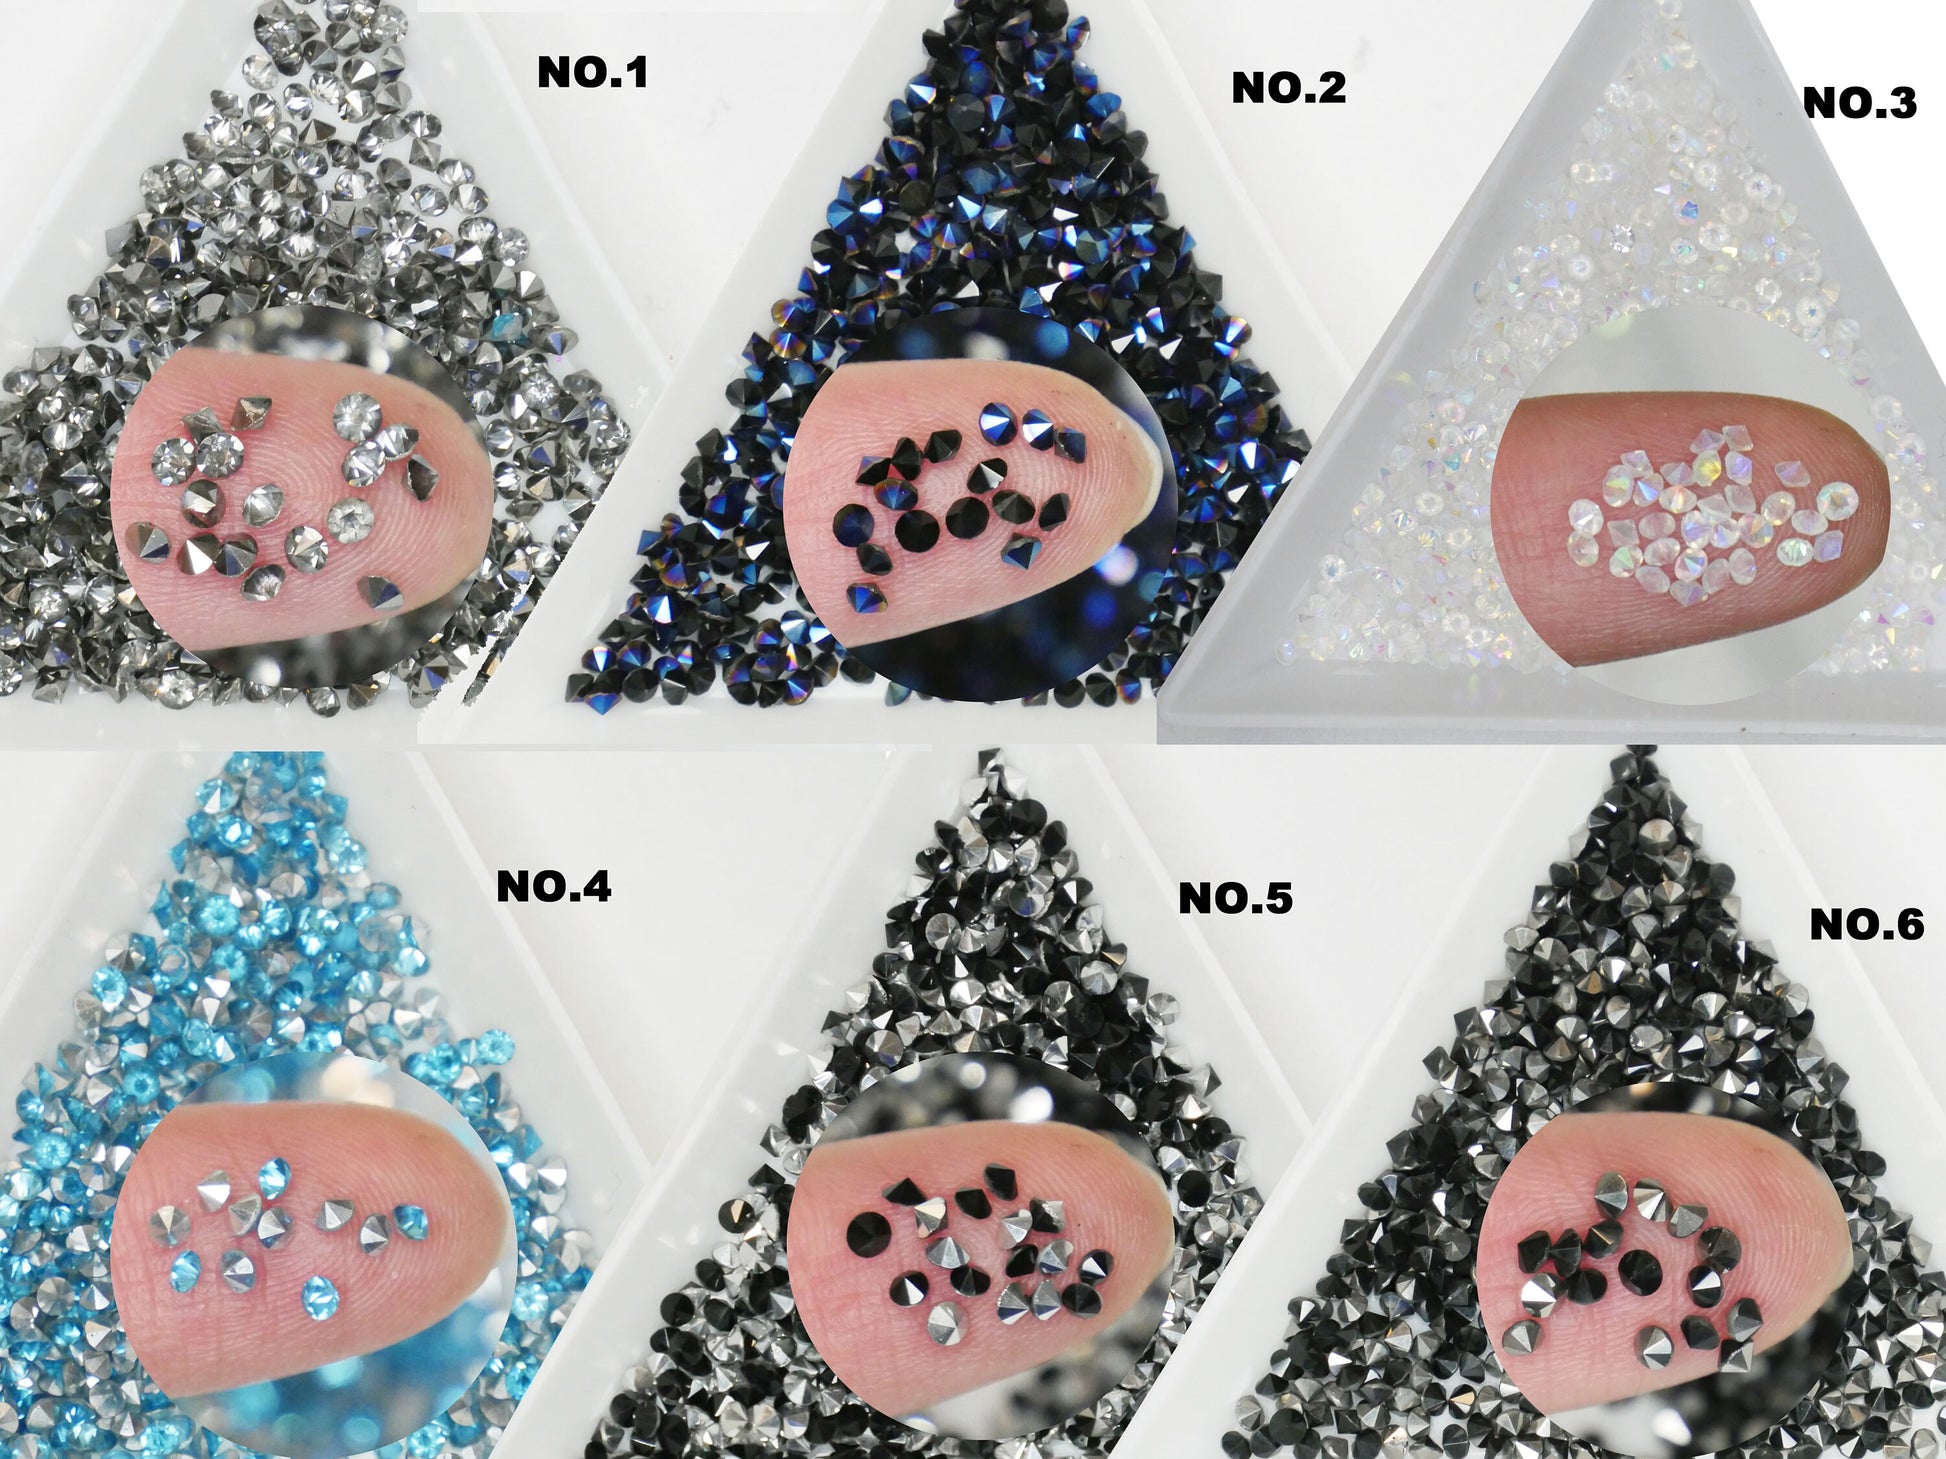 2.3 mm Pointed Gemstones for nail art/ Microbead Culet Diamond crystal Nail Art Decals/ Mini Punk Metallic Nail design art decorations